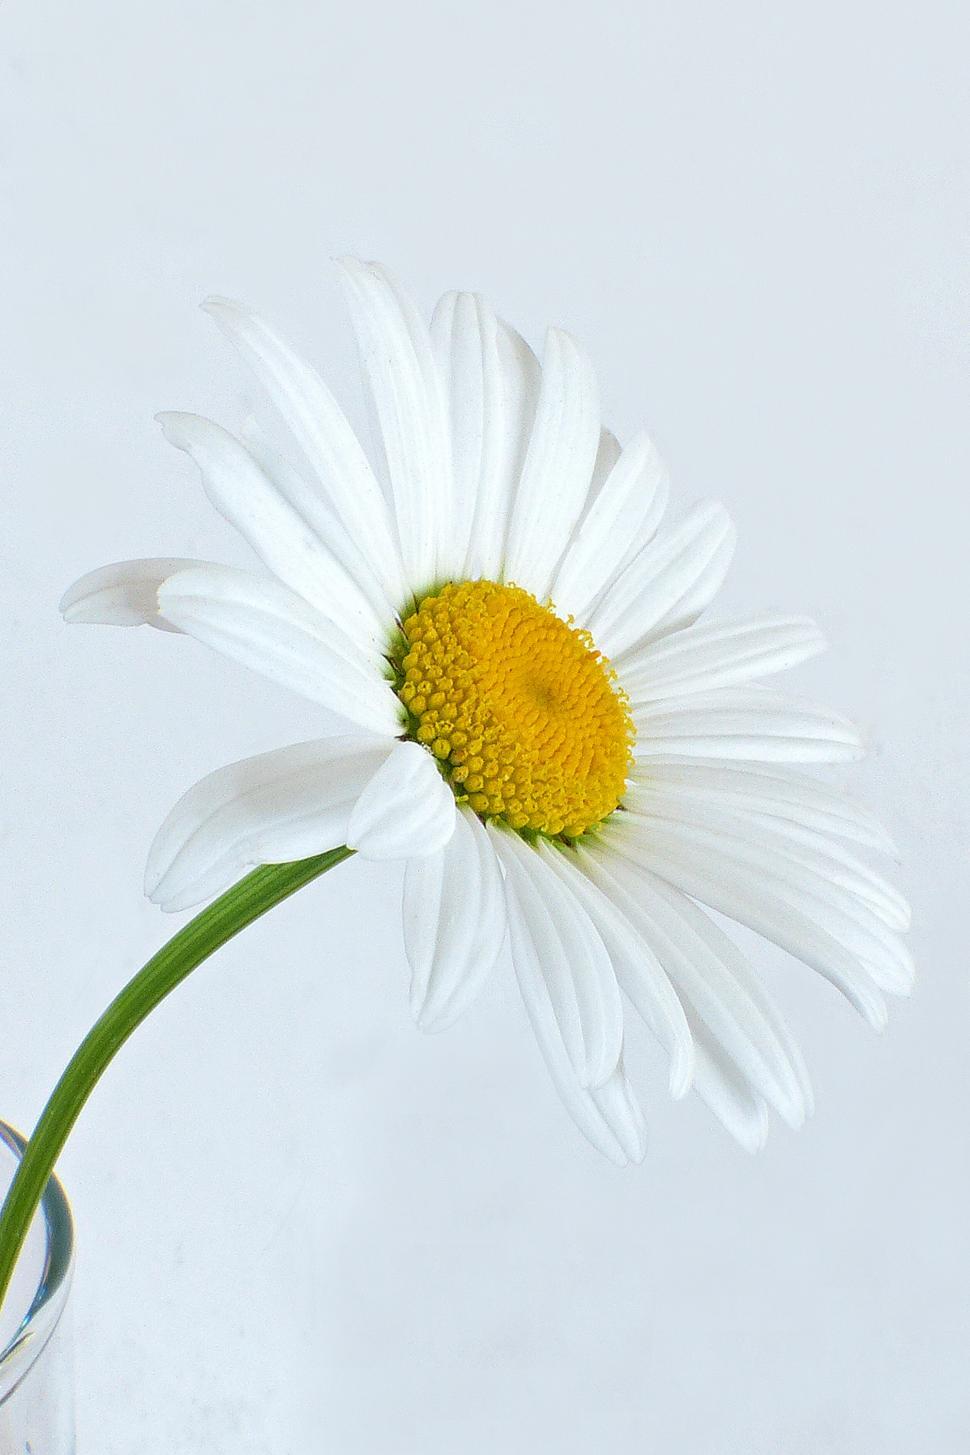 Free Image of Daisy Flower 